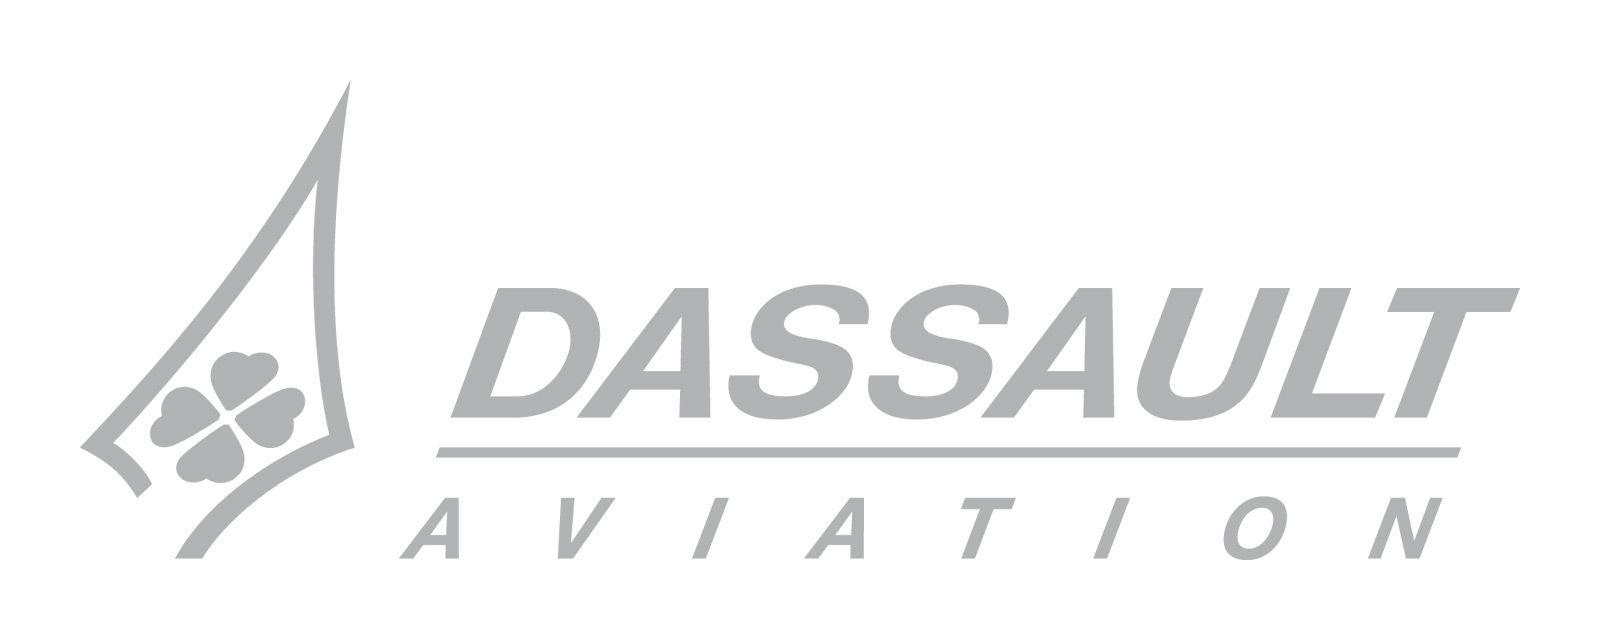 Aviation Logo - History of the Dassault Aviation logo